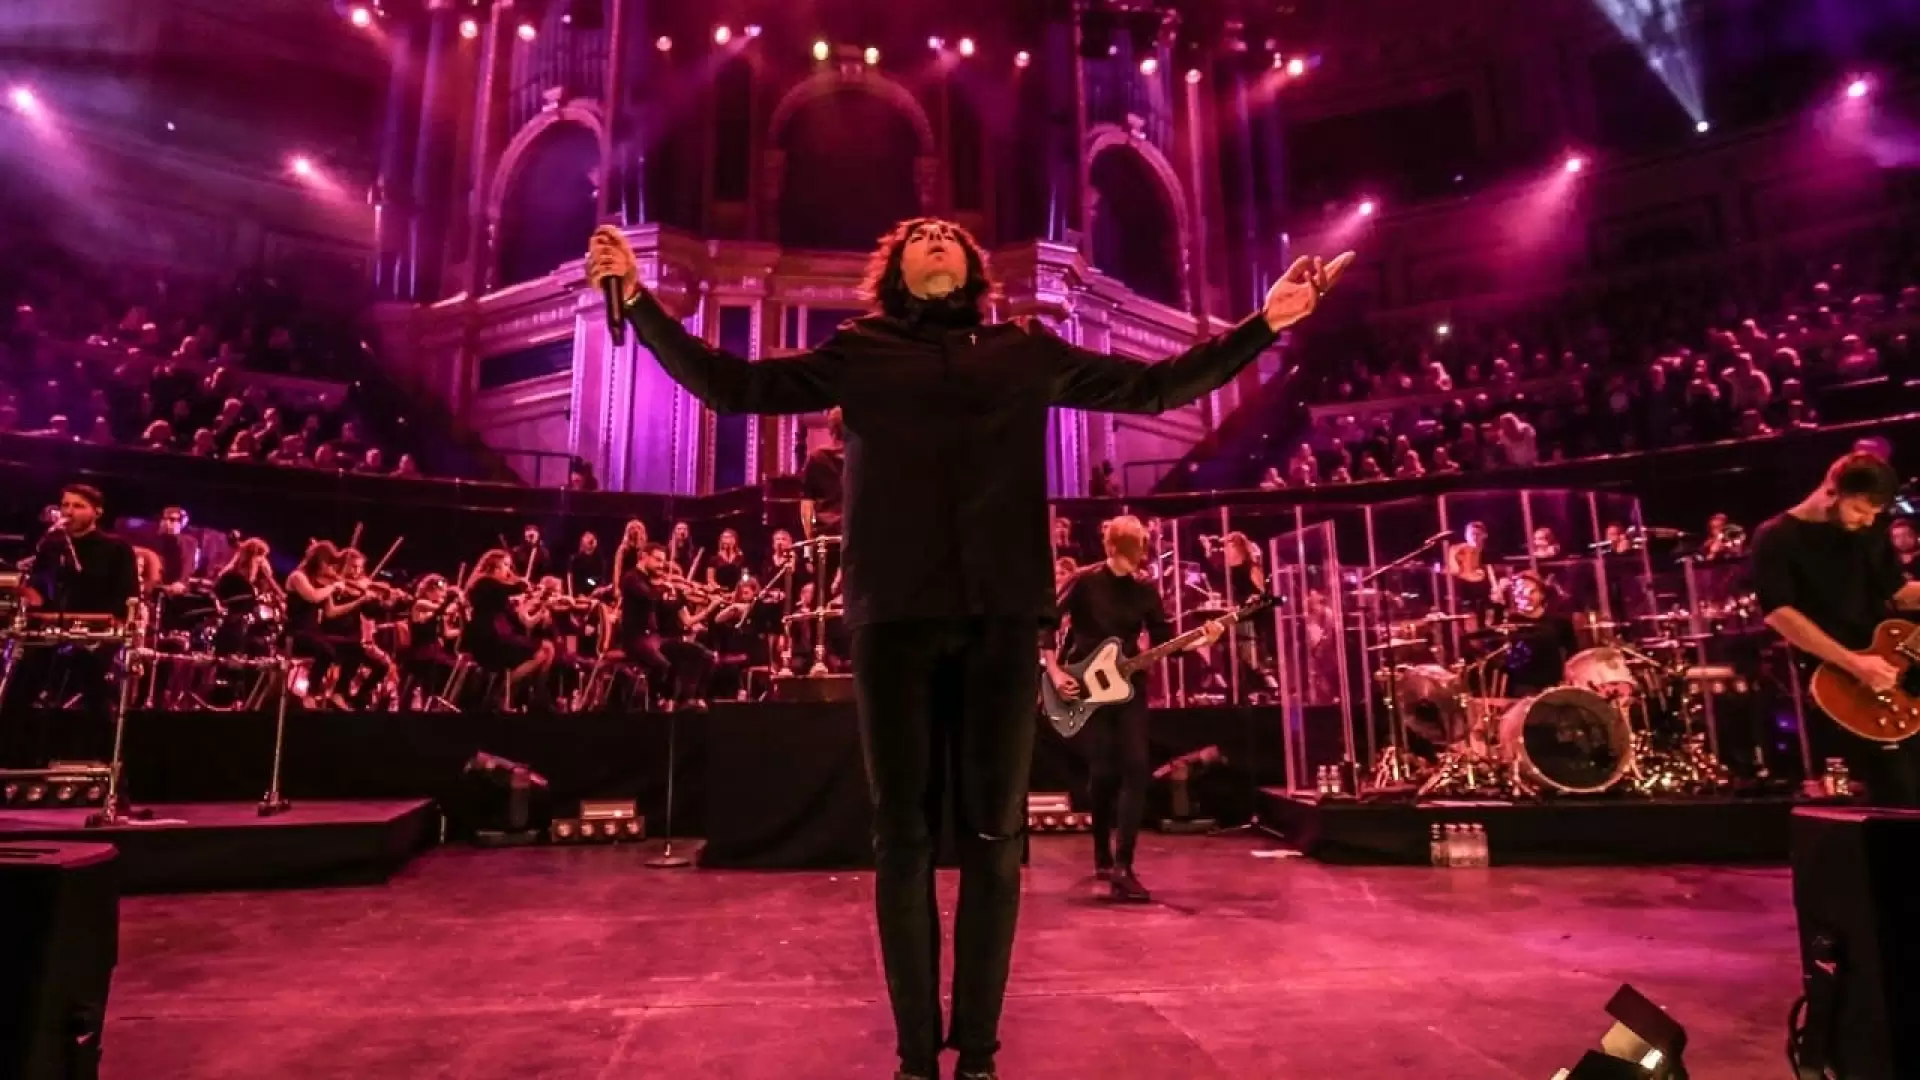 دانلود کنسرت Bring Me The Horizon – Live At The Royal Albert Hall 2016